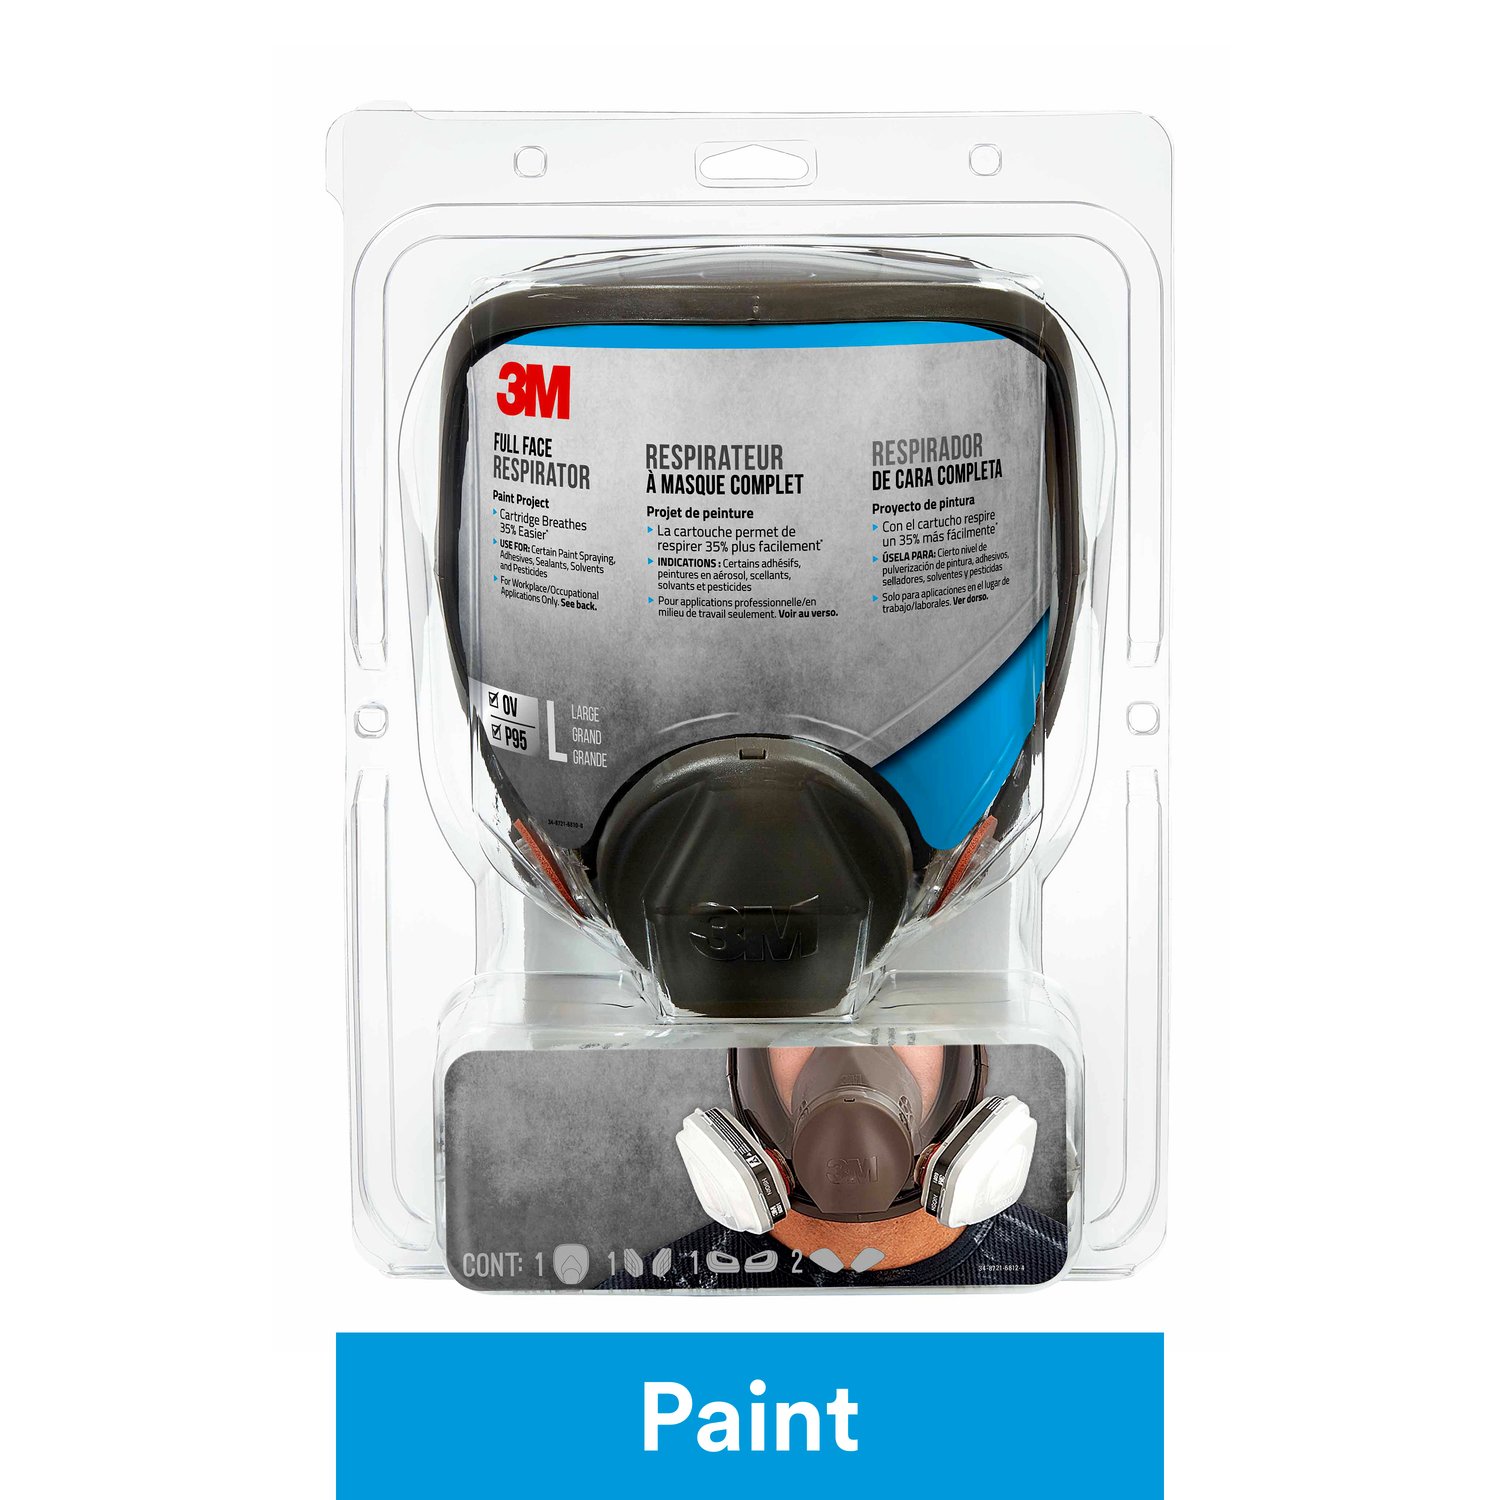 7100159316 - 3M Full Face Reusable Paint Project Respirator OV/P95, 69P71P1-DC,
Large, 1 each/pack, 2 packs/case